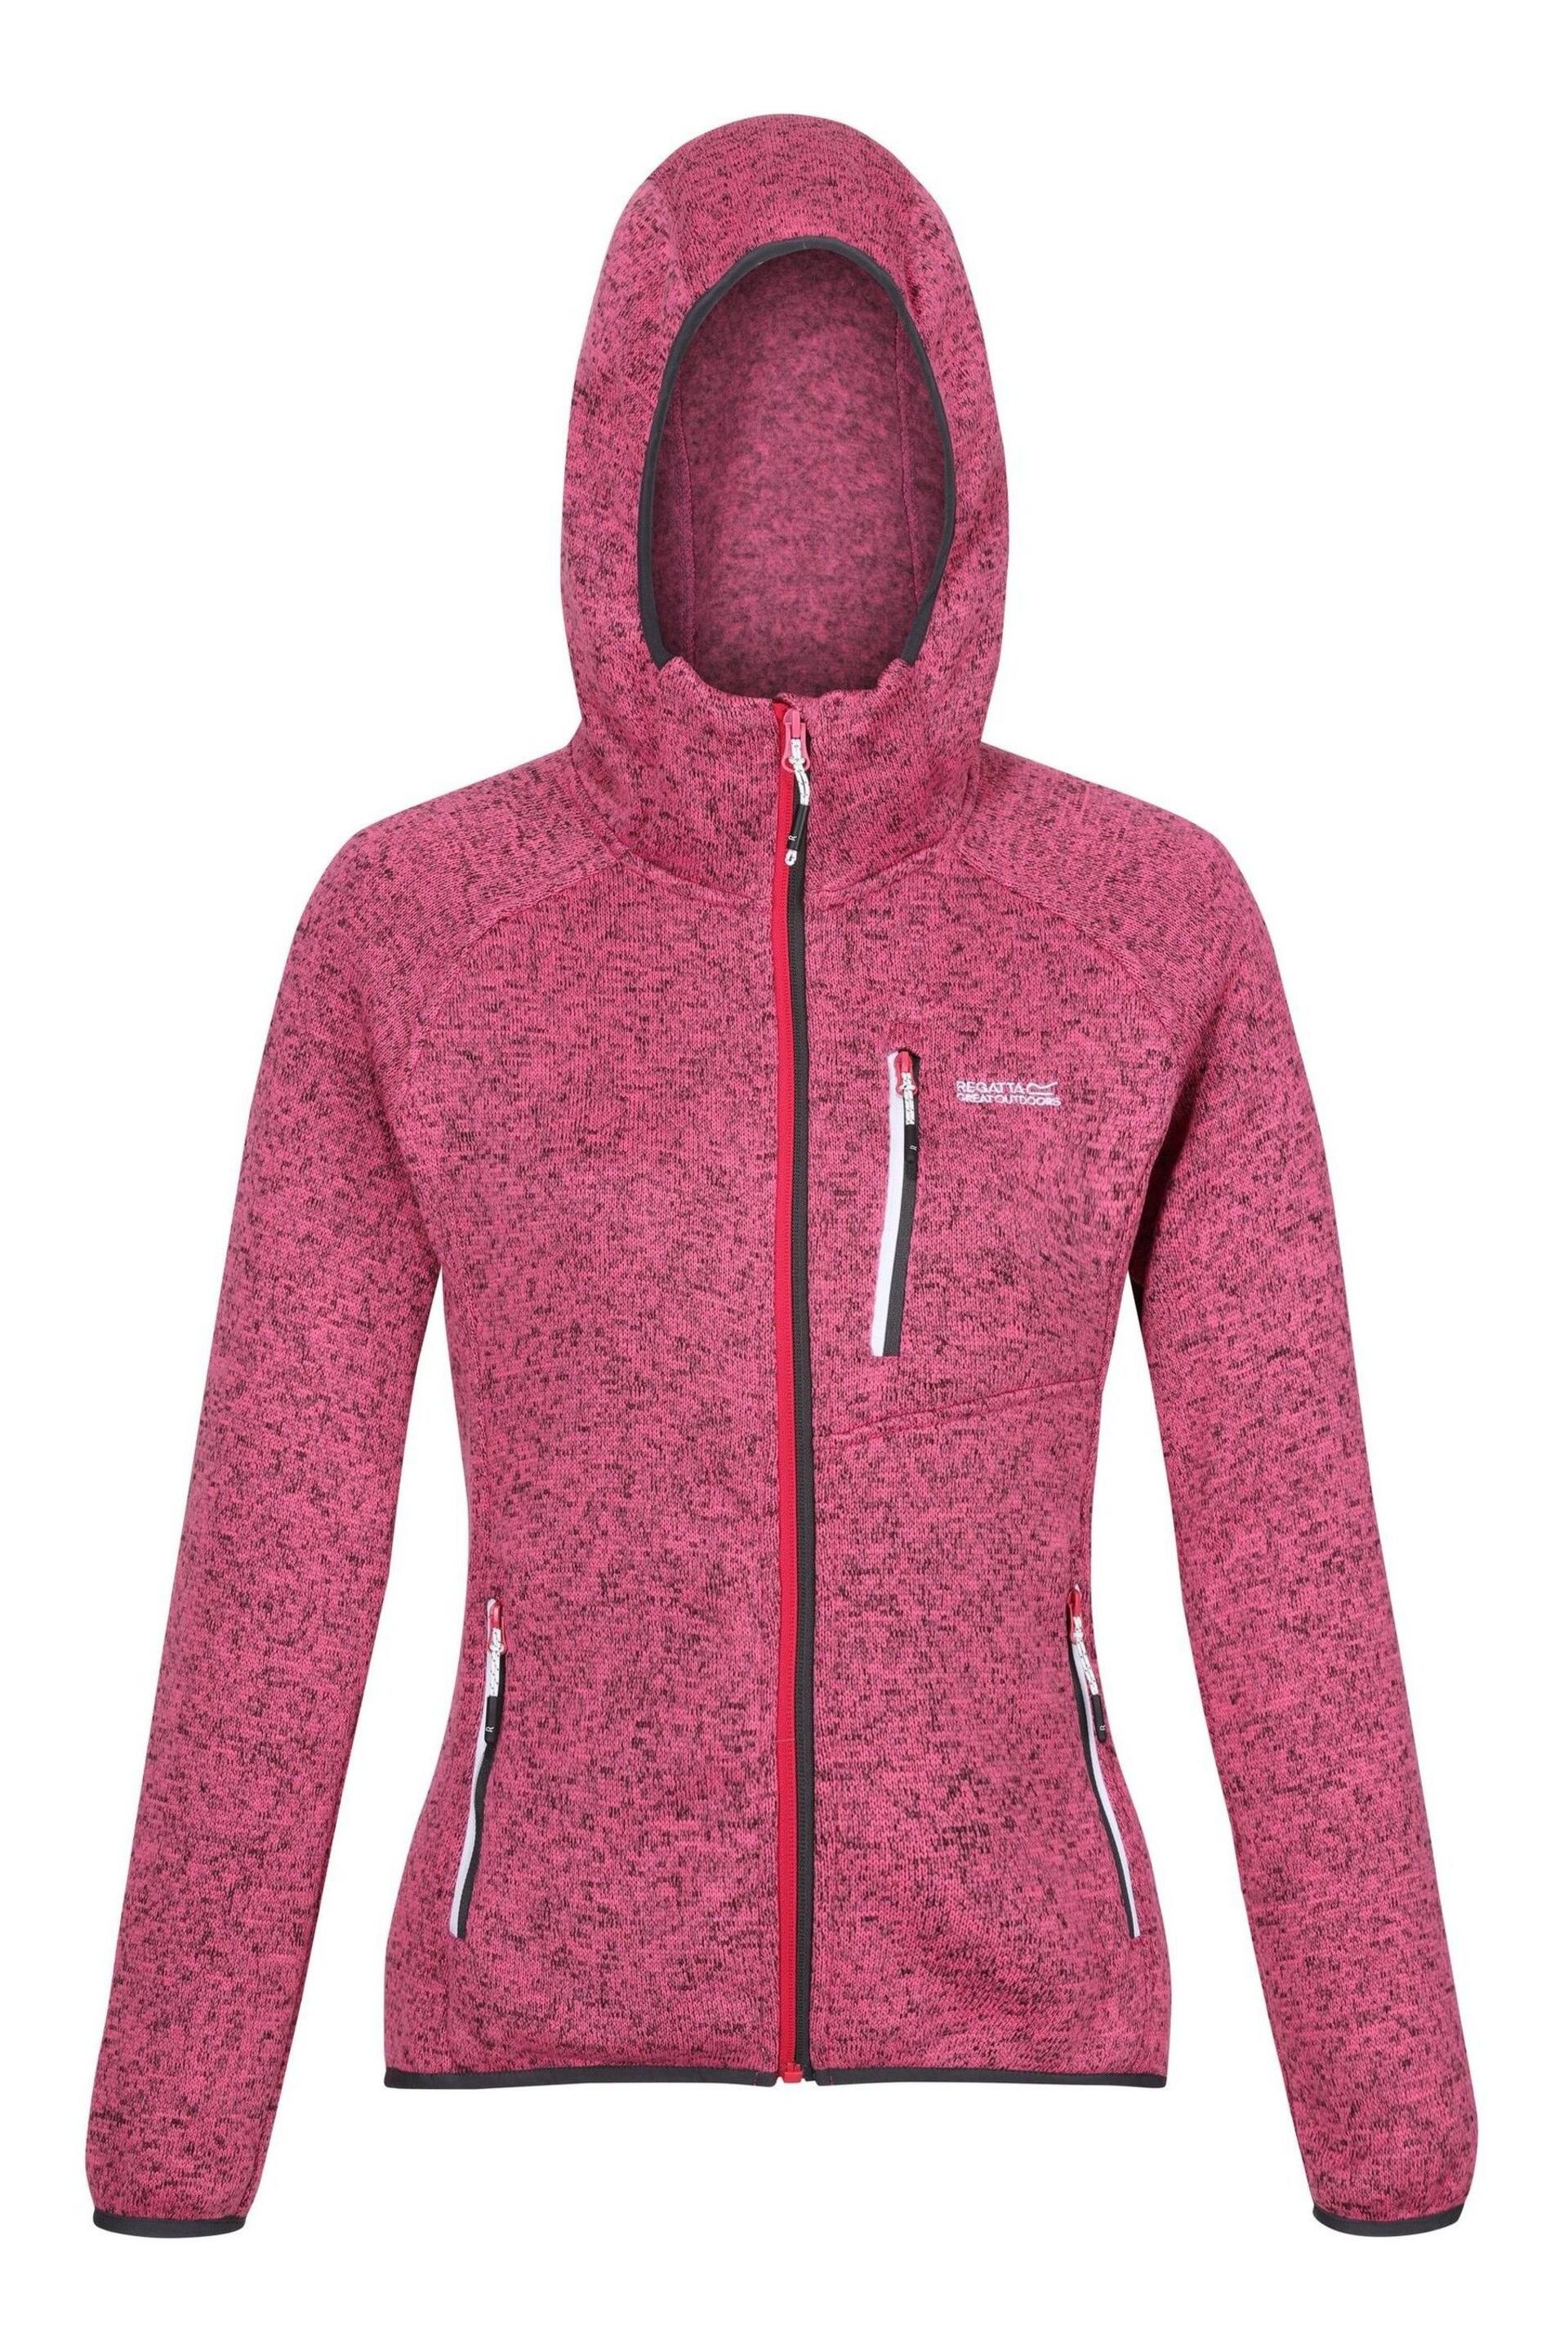 Regatta Pink Womens Newhill Full Zip Fleece - Image 5 of 7